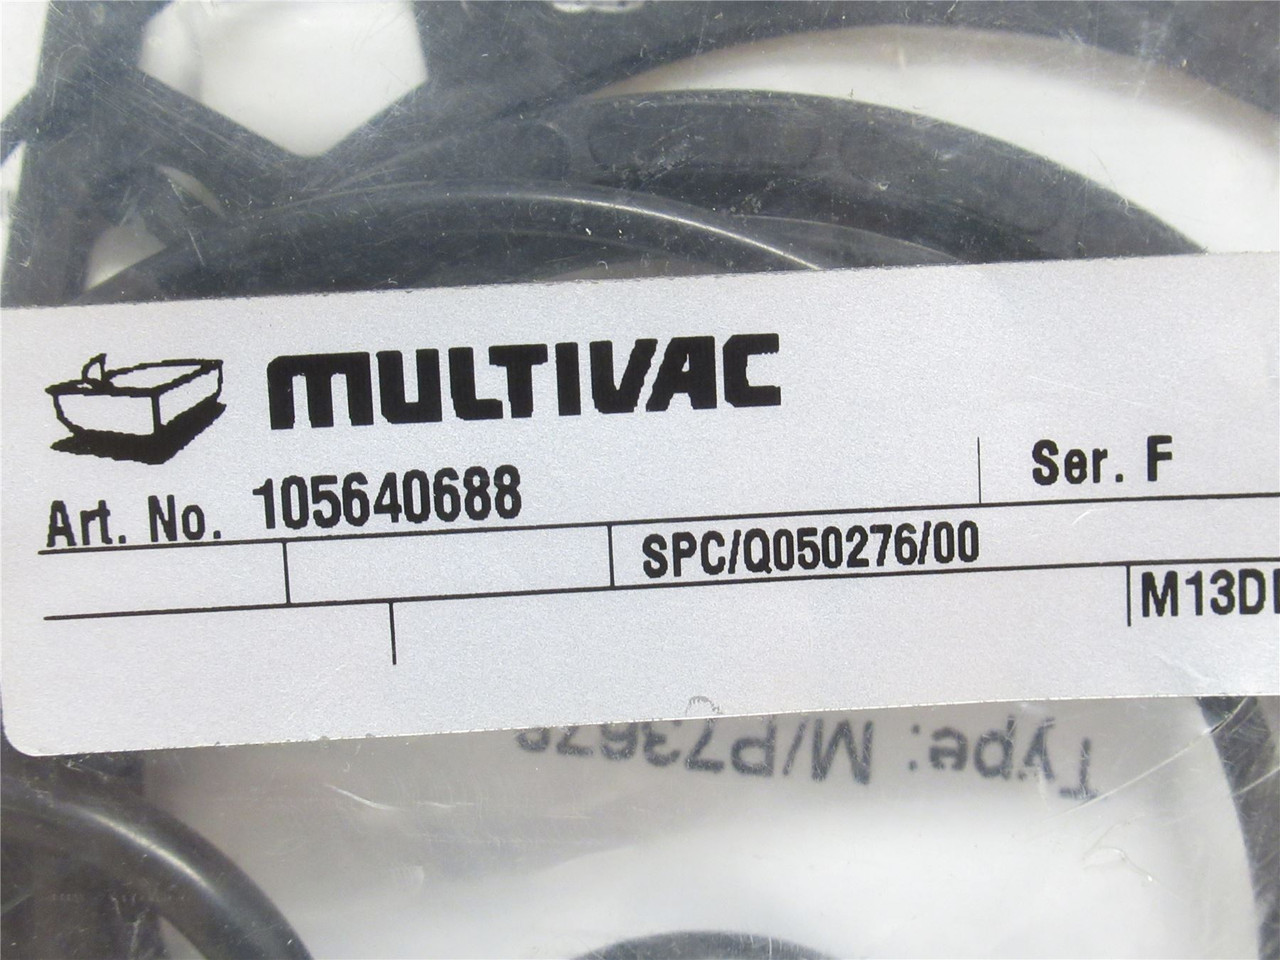 Multivac SPC/Q050276/00; Gasket/Seal Kit 105640688